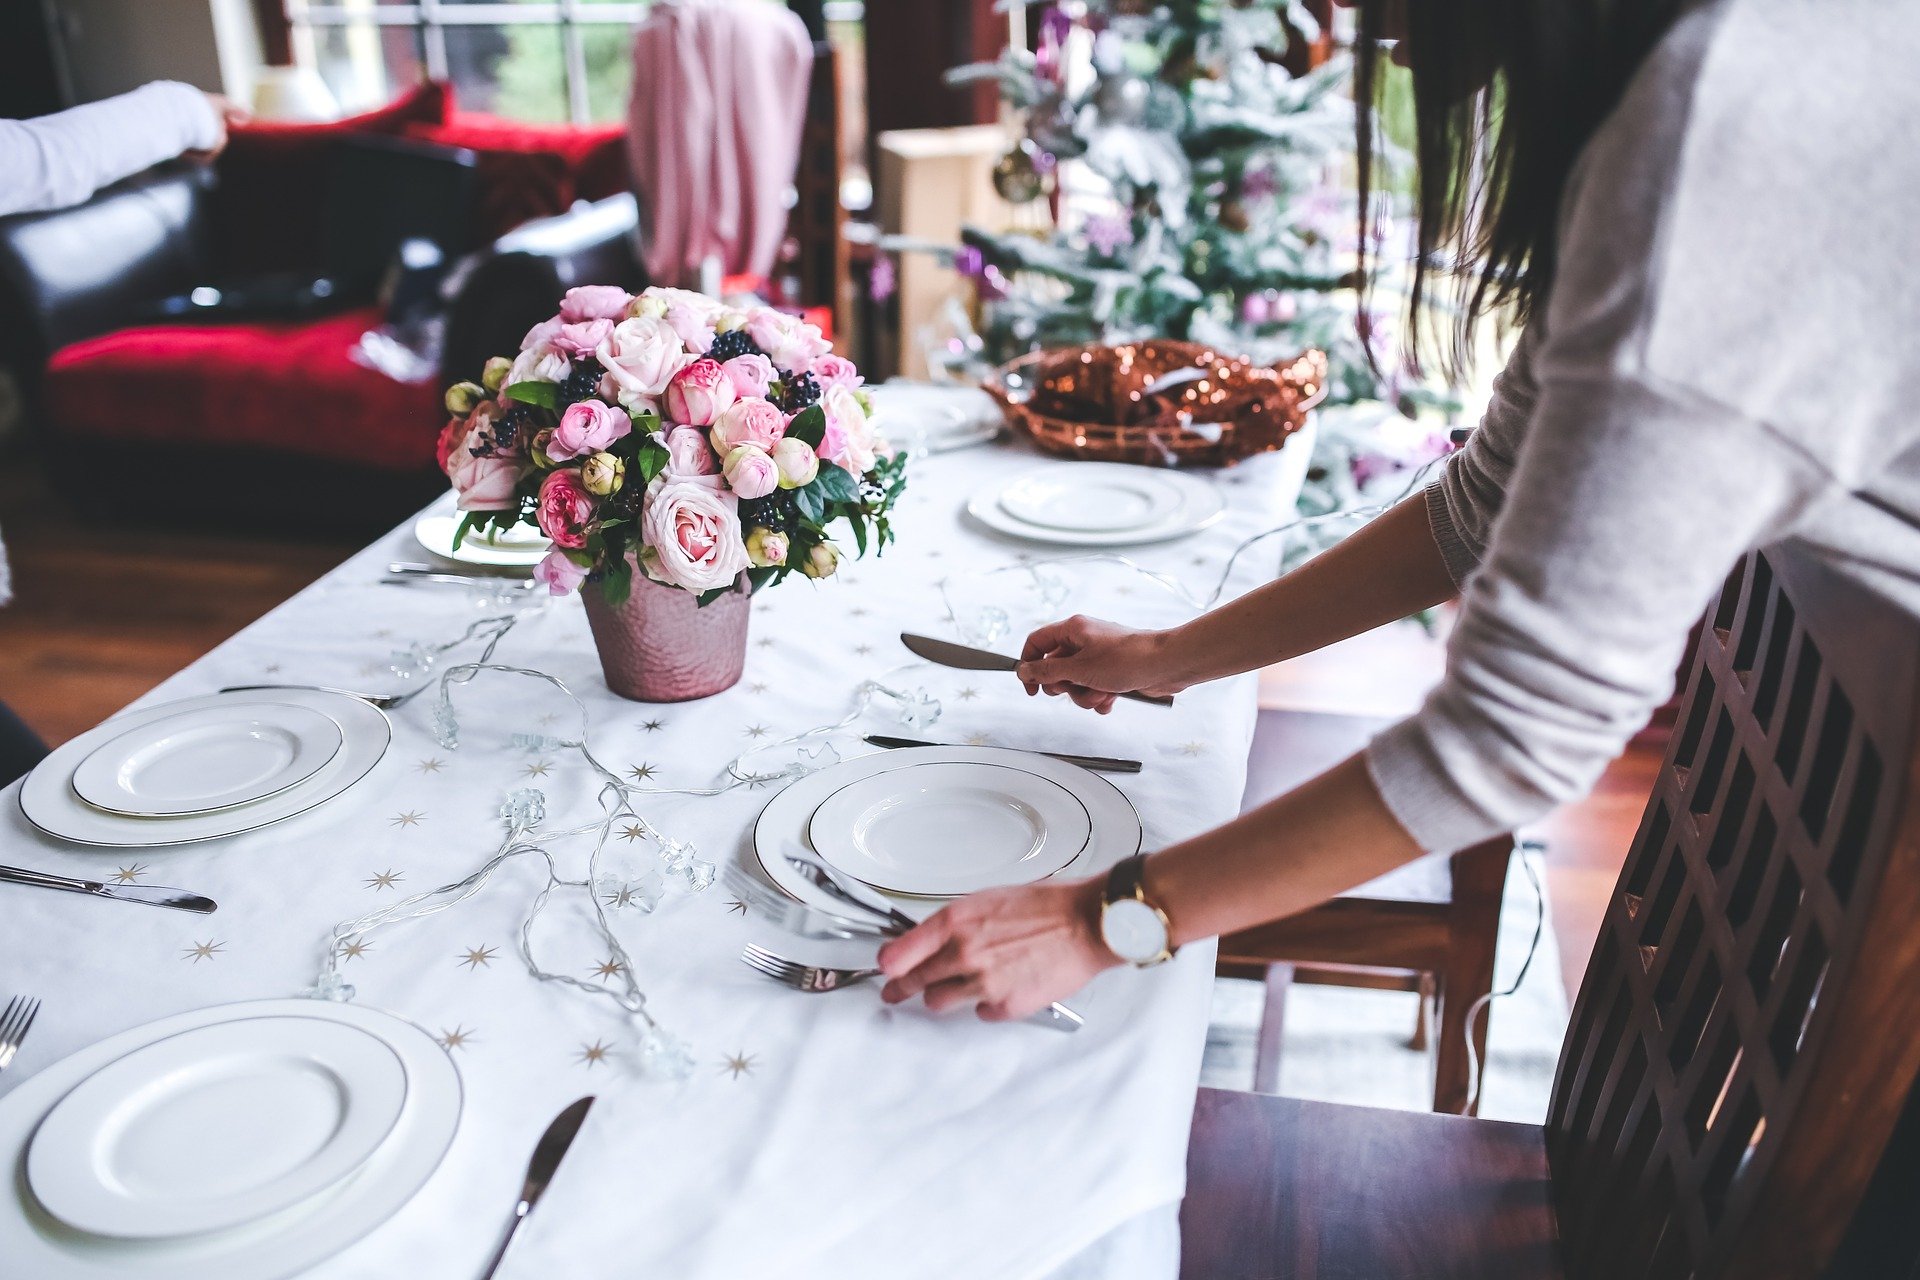 A dinner table being set. | Source: Karolina Grabowska/Pixabay 